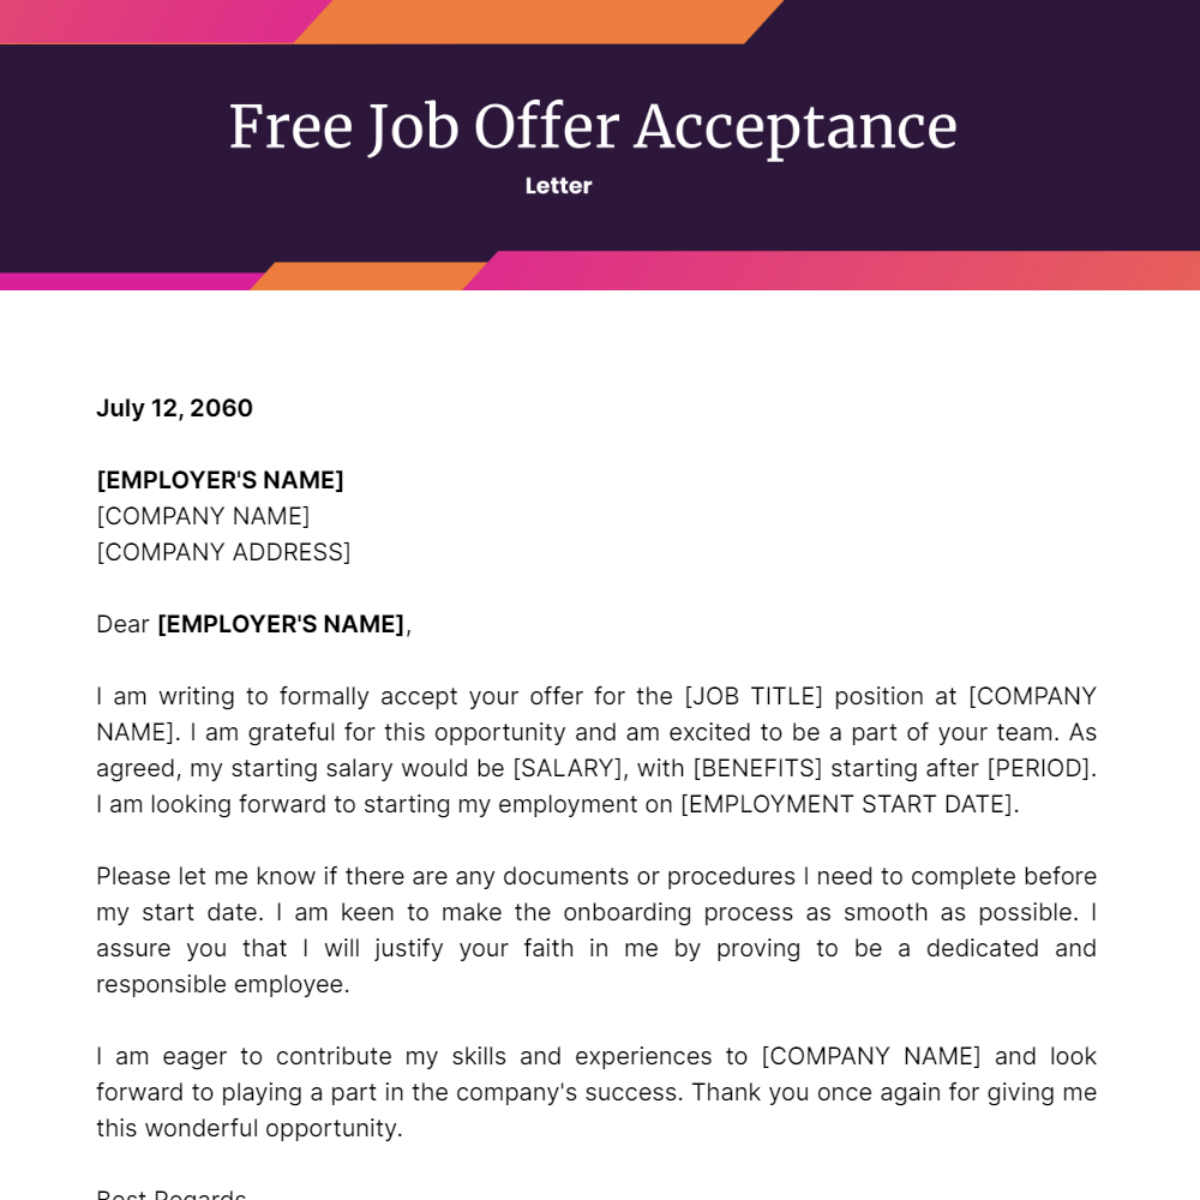 Job Offer Acceptance Letter Template